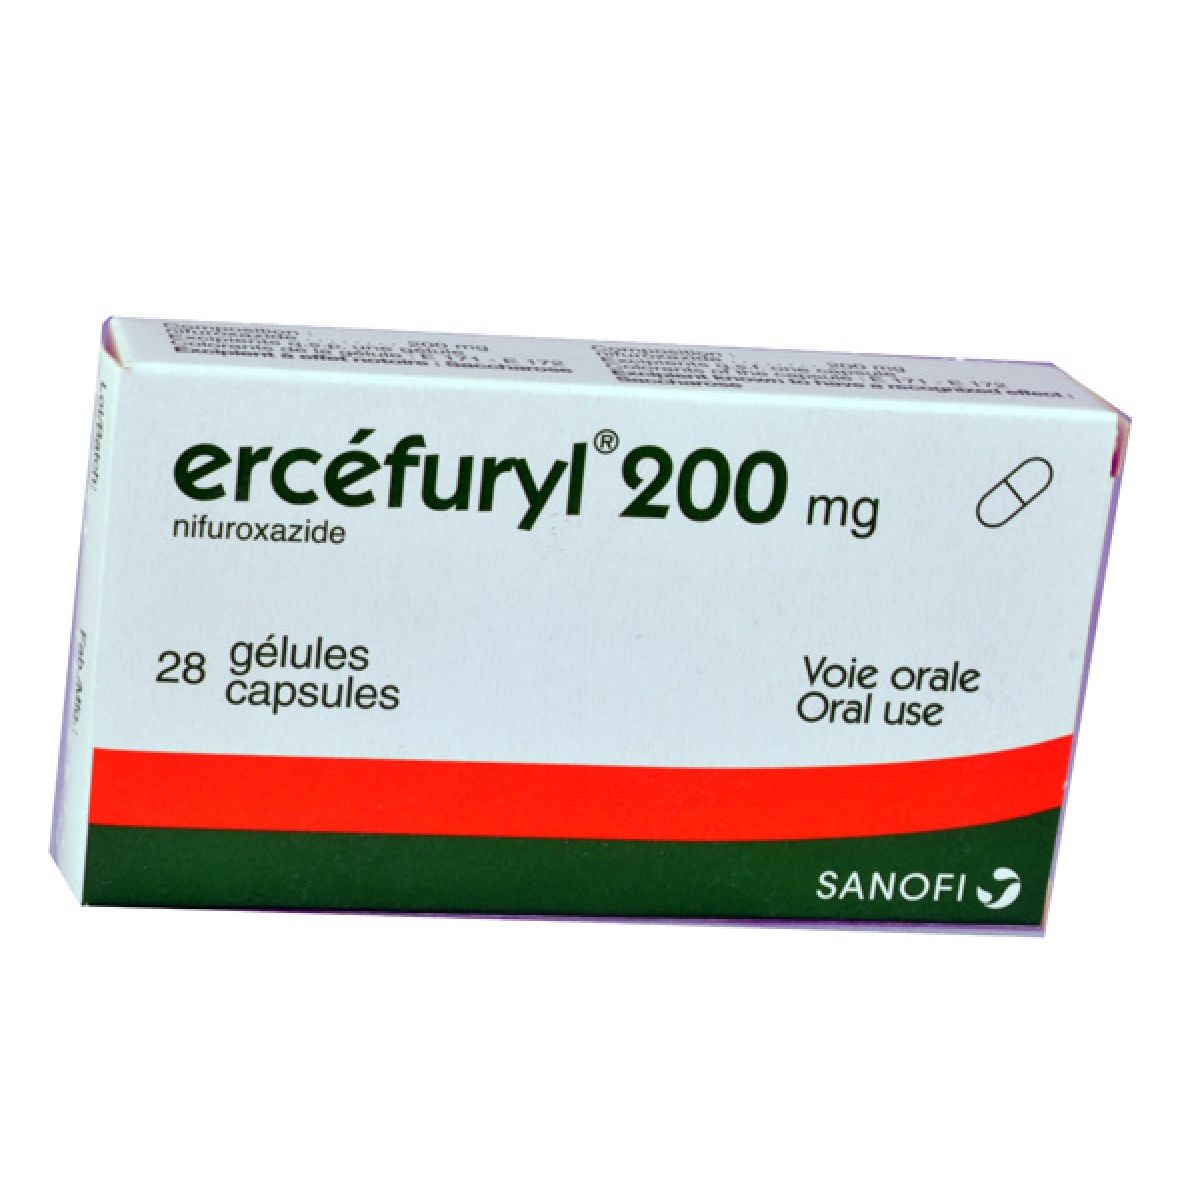 Ercefuryl - image 0